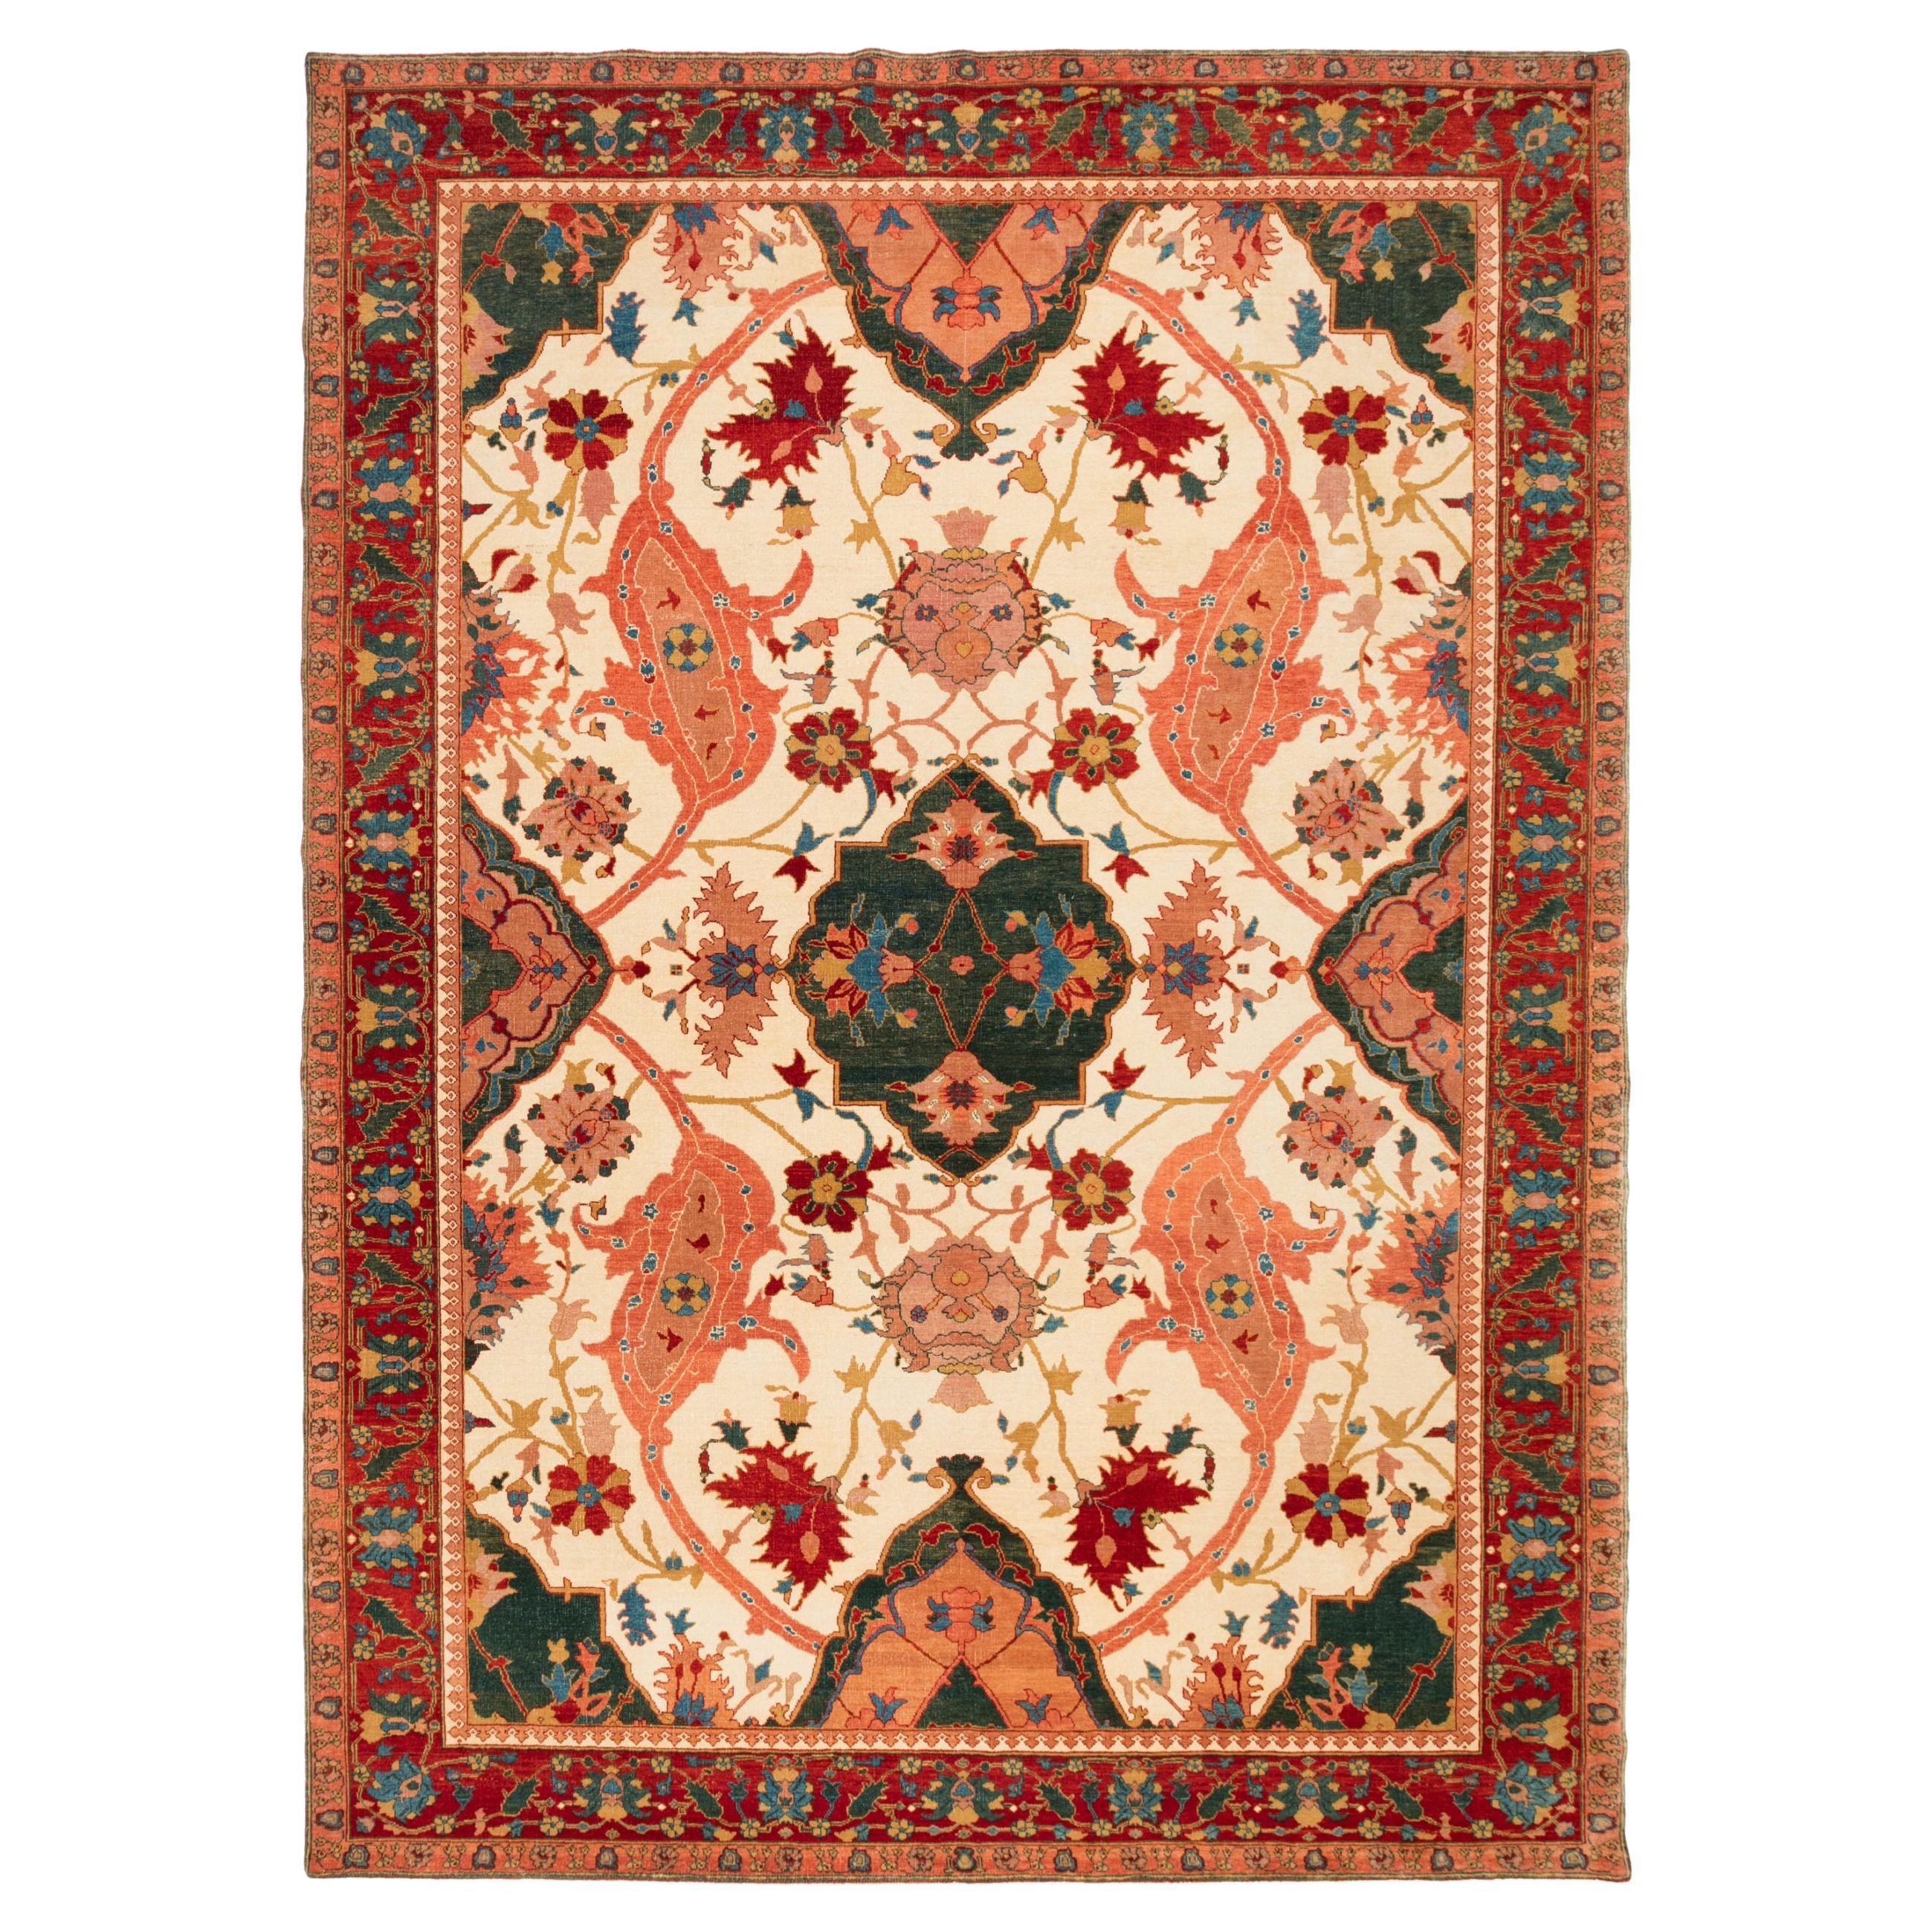 Ararat Rugs Garrus Bidjar Medallion Carpet 19th Century Revival Rug Natural Dyed For Sale